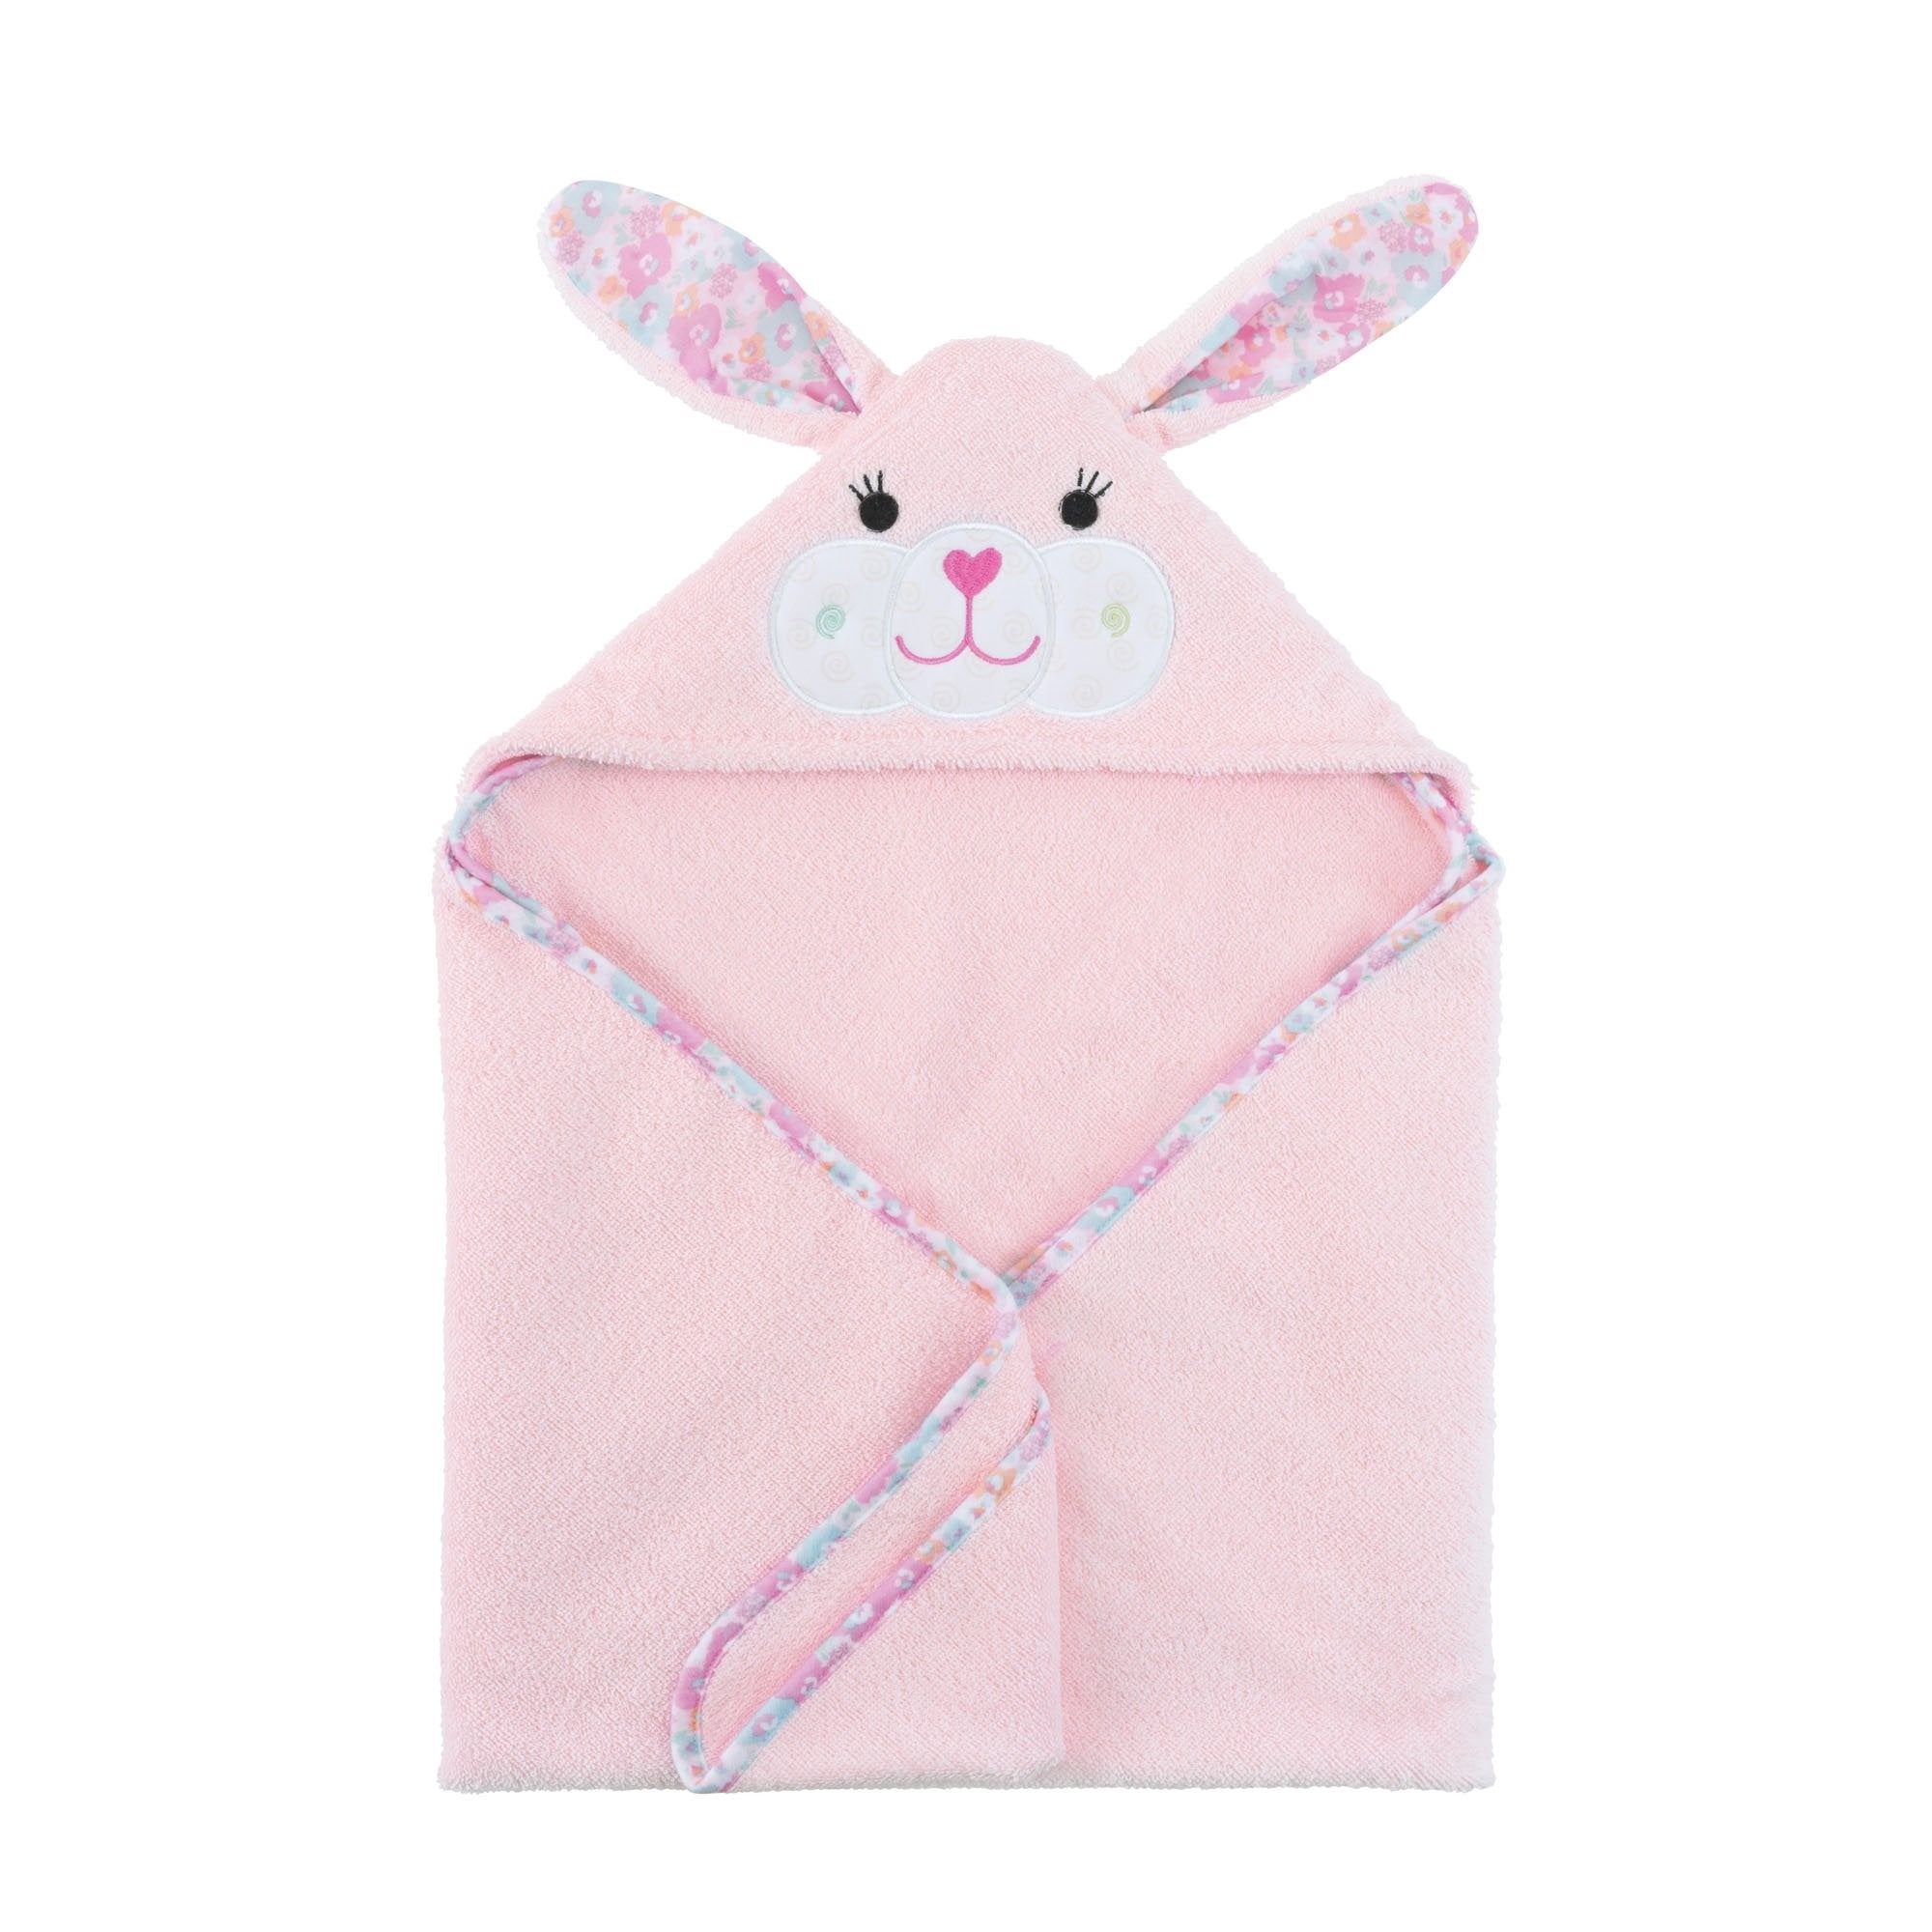 Rabbitt - Baby Hoody Towel